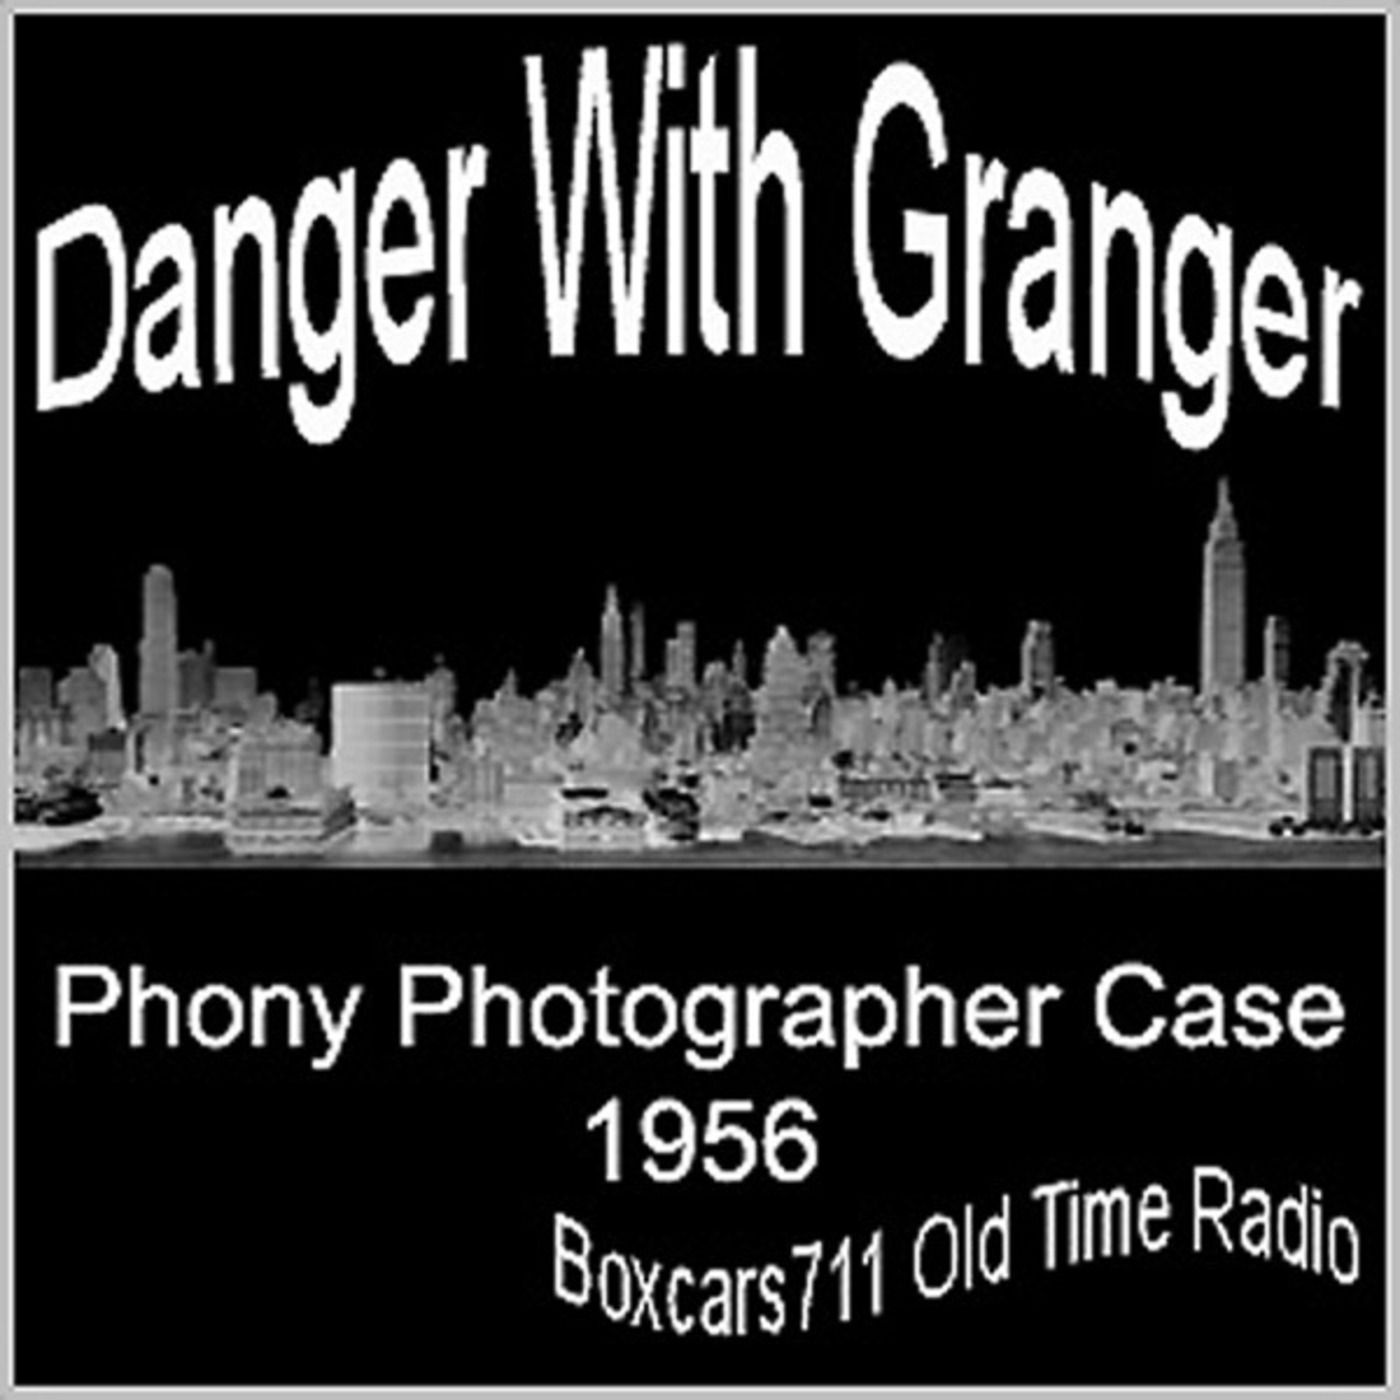 Episode 9630: Danger With Grainger - 